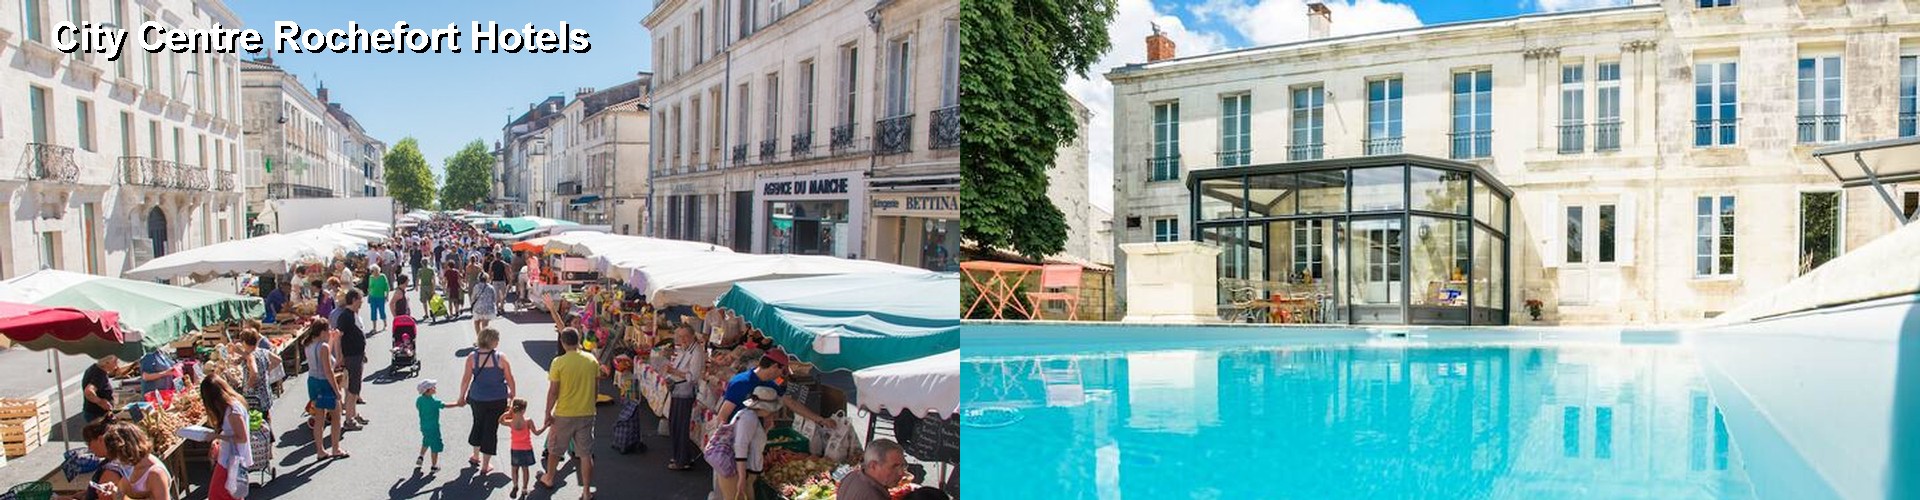 5 Best Hotels near City Centre Rochefort